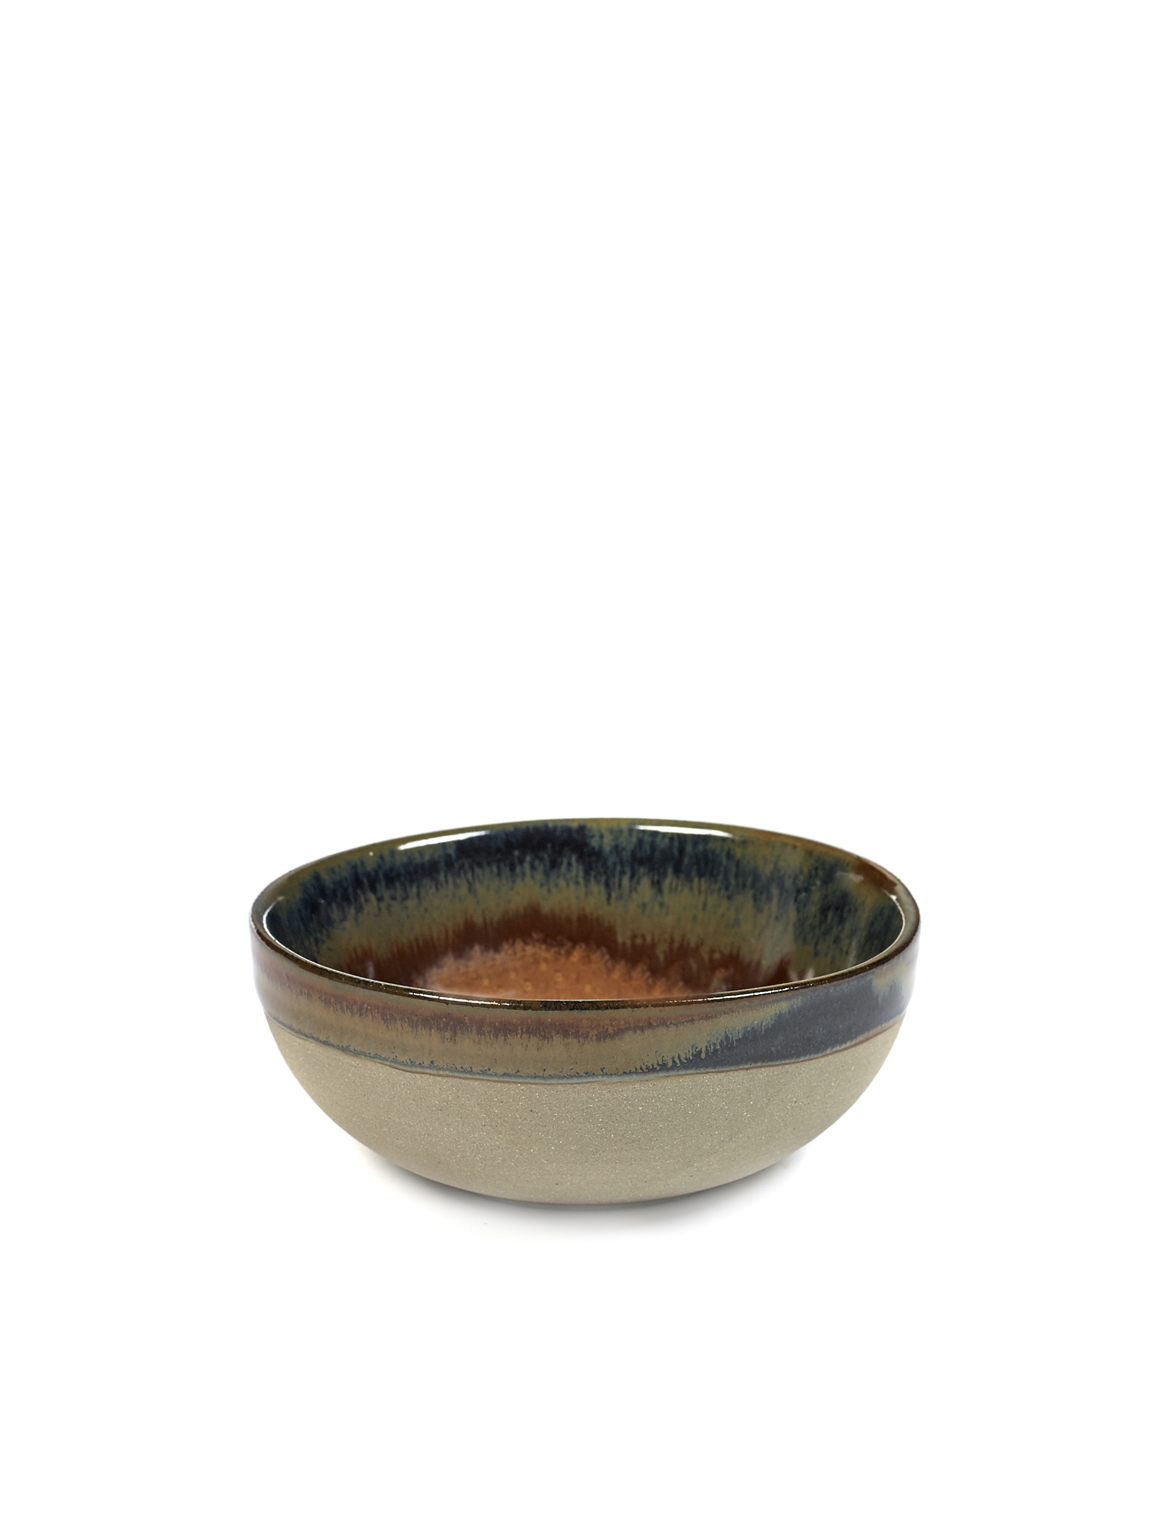 Sergio Herman for Serax Surface - Medium Bowl (11cm) Rusty Brown